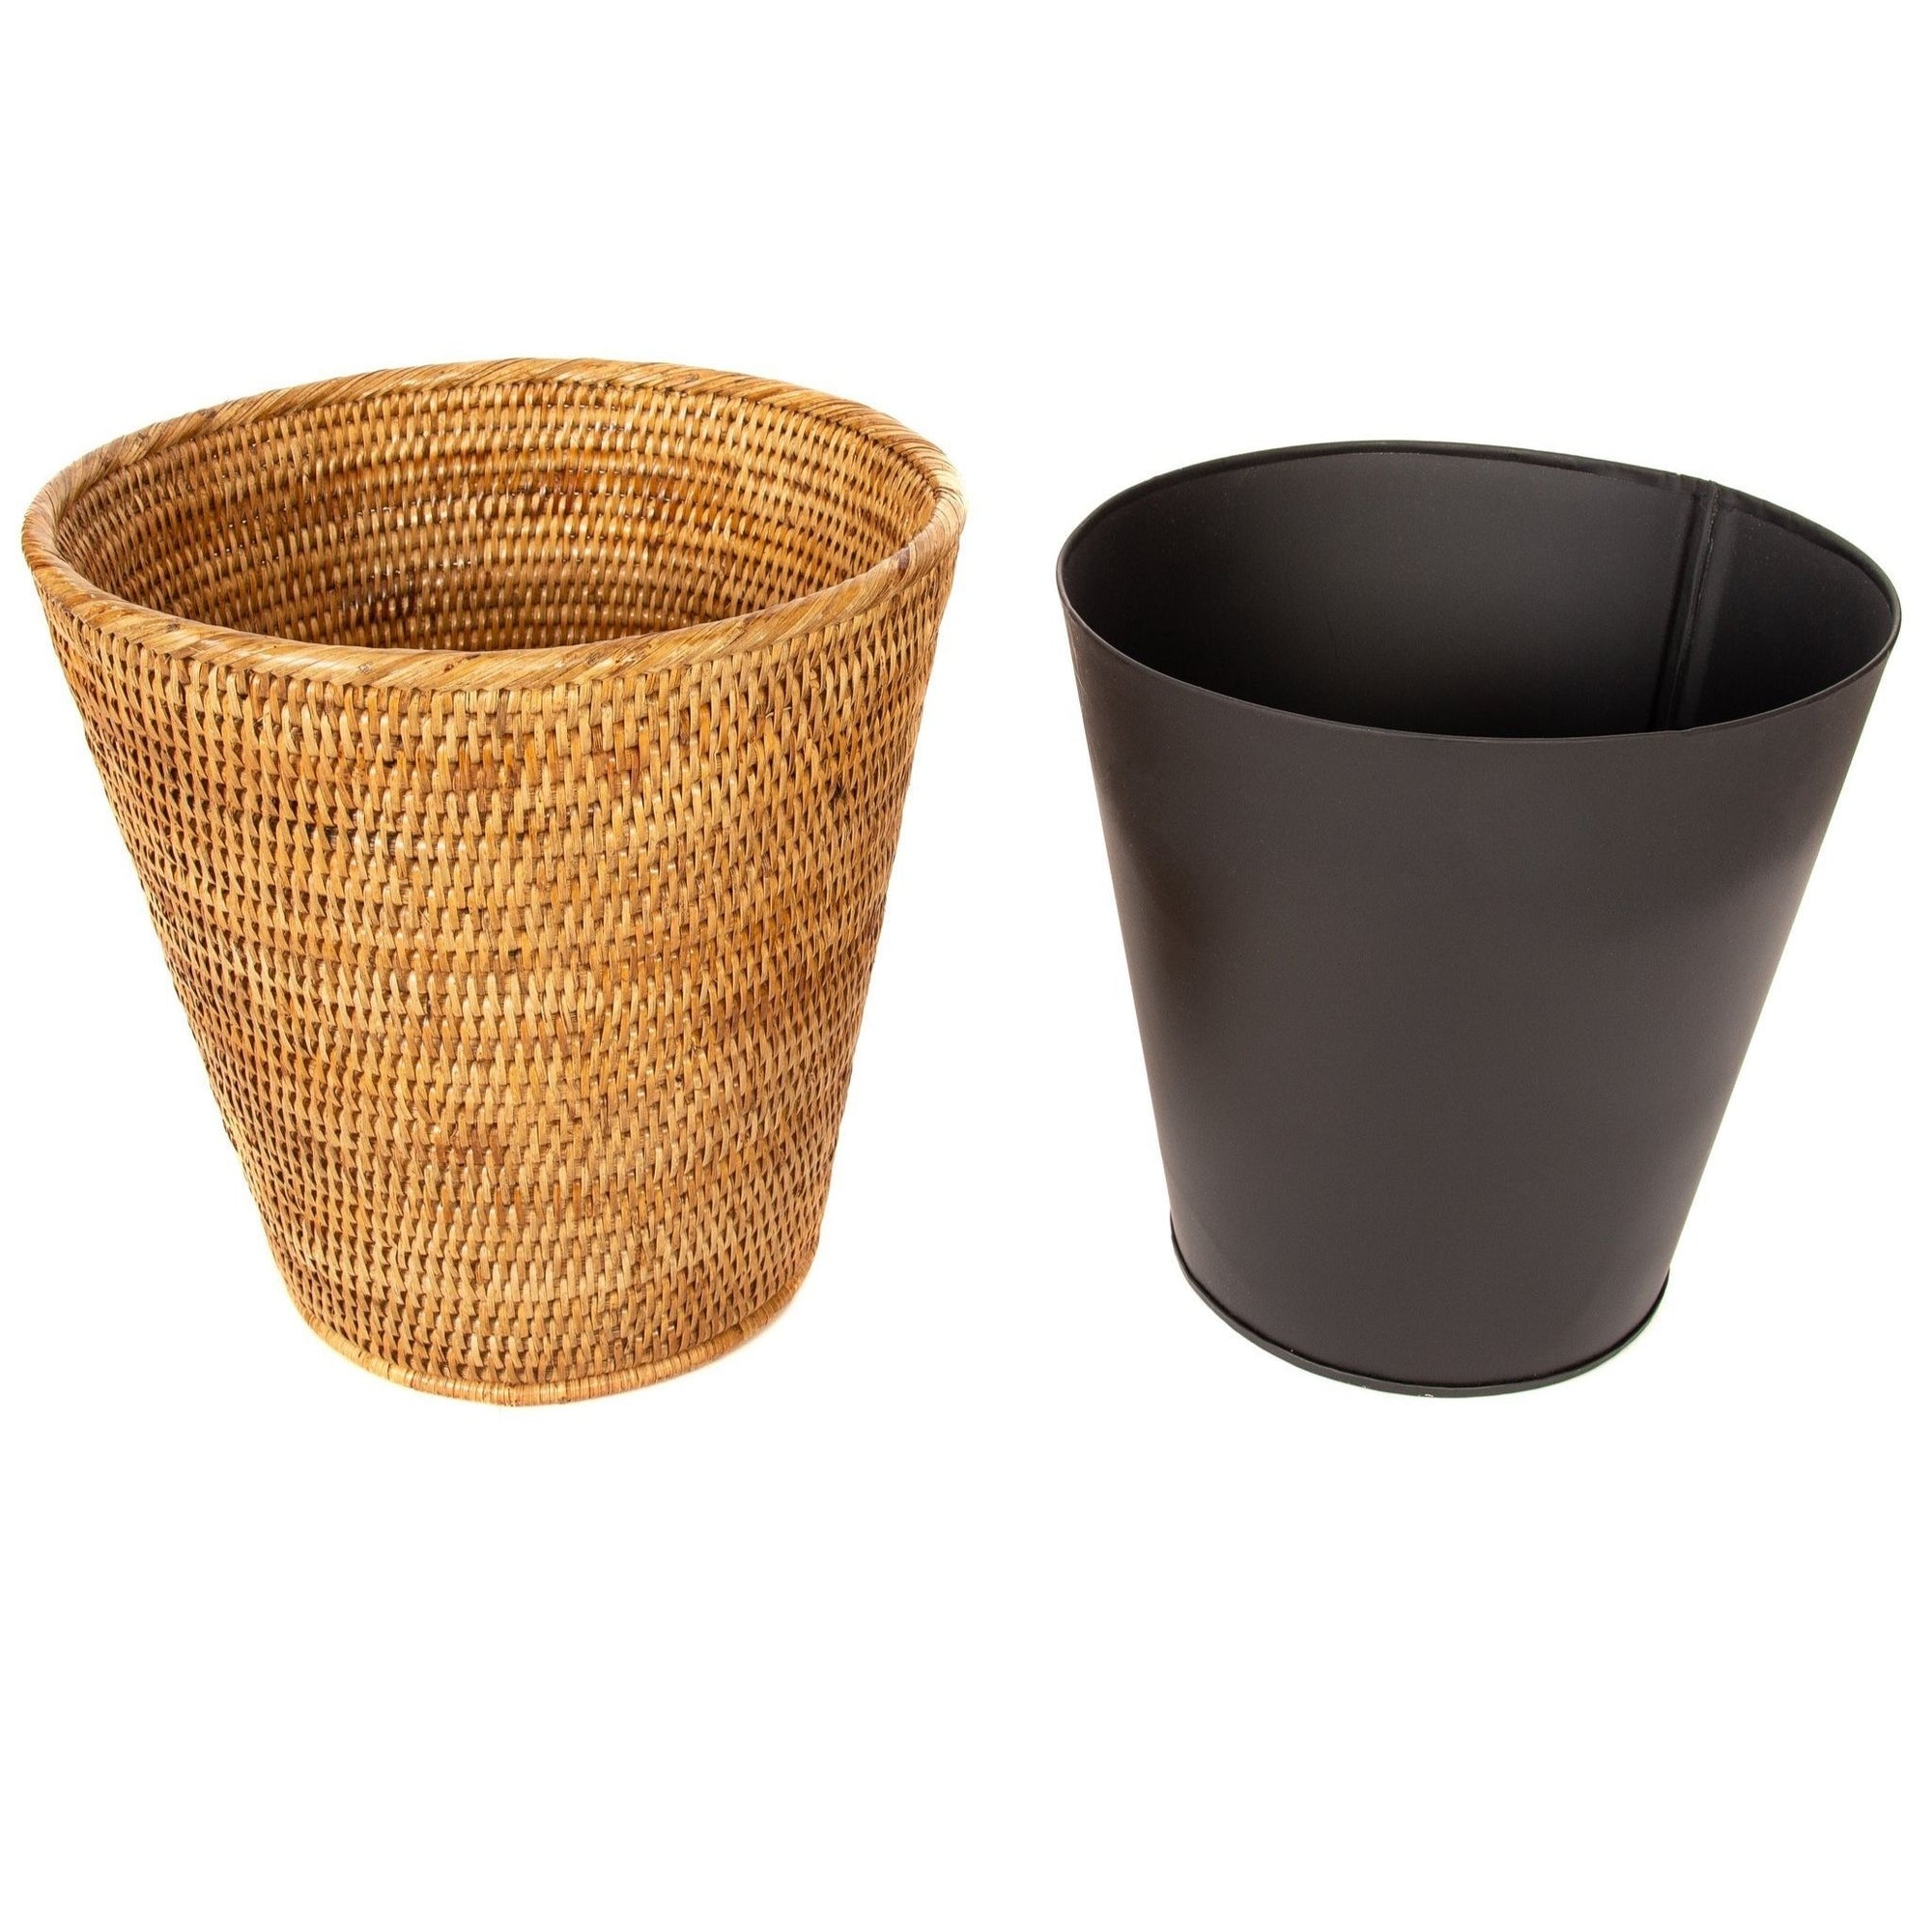 Kouboo La Jolla Rattan Round Waste Basket with Plastic Insert & Lid Honey-Brown